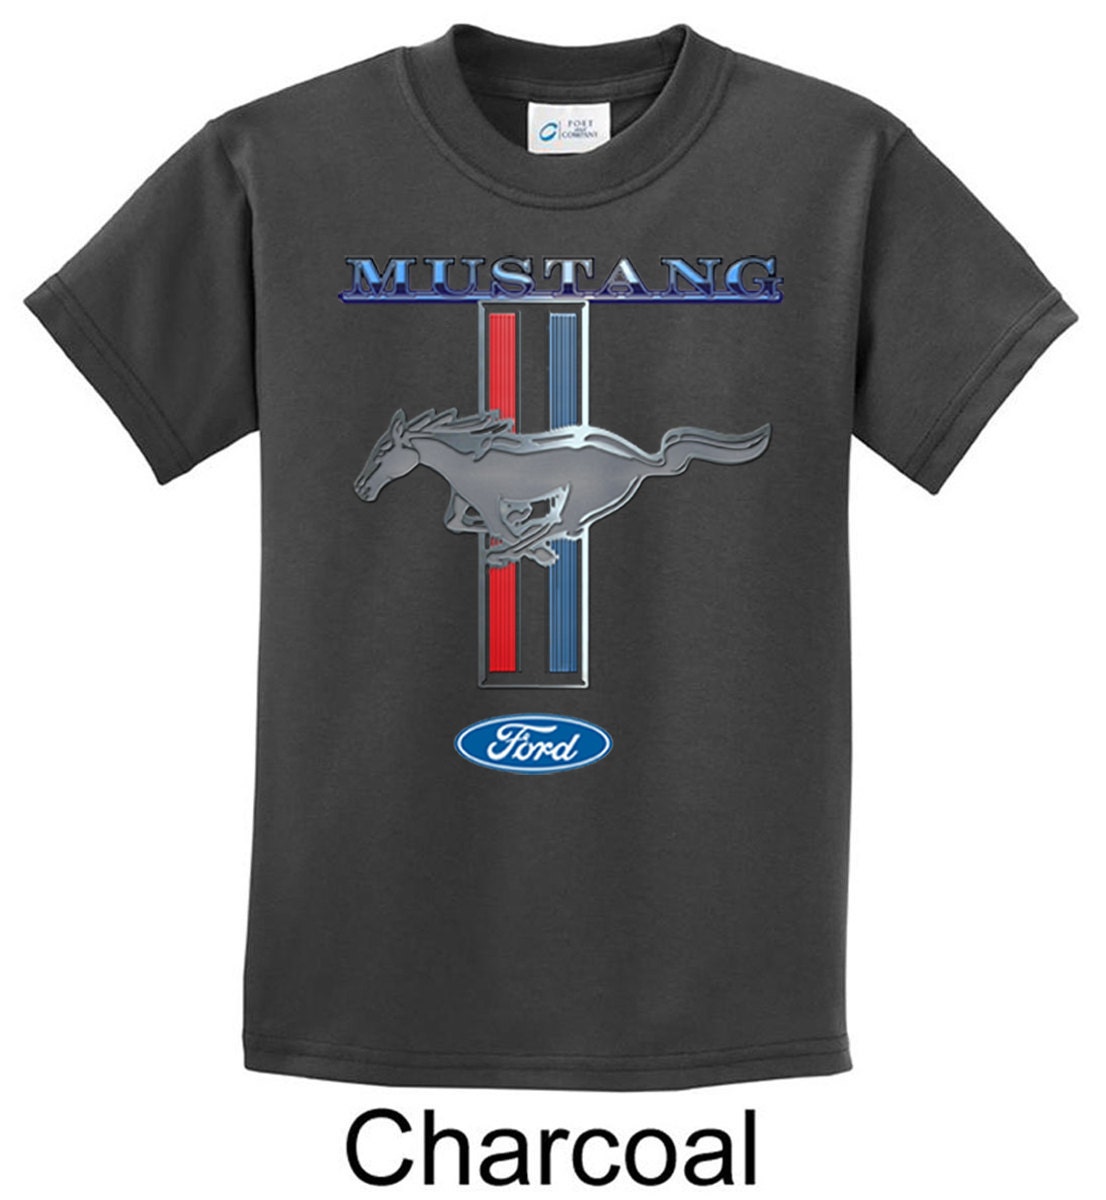 Ford kids t-shirt